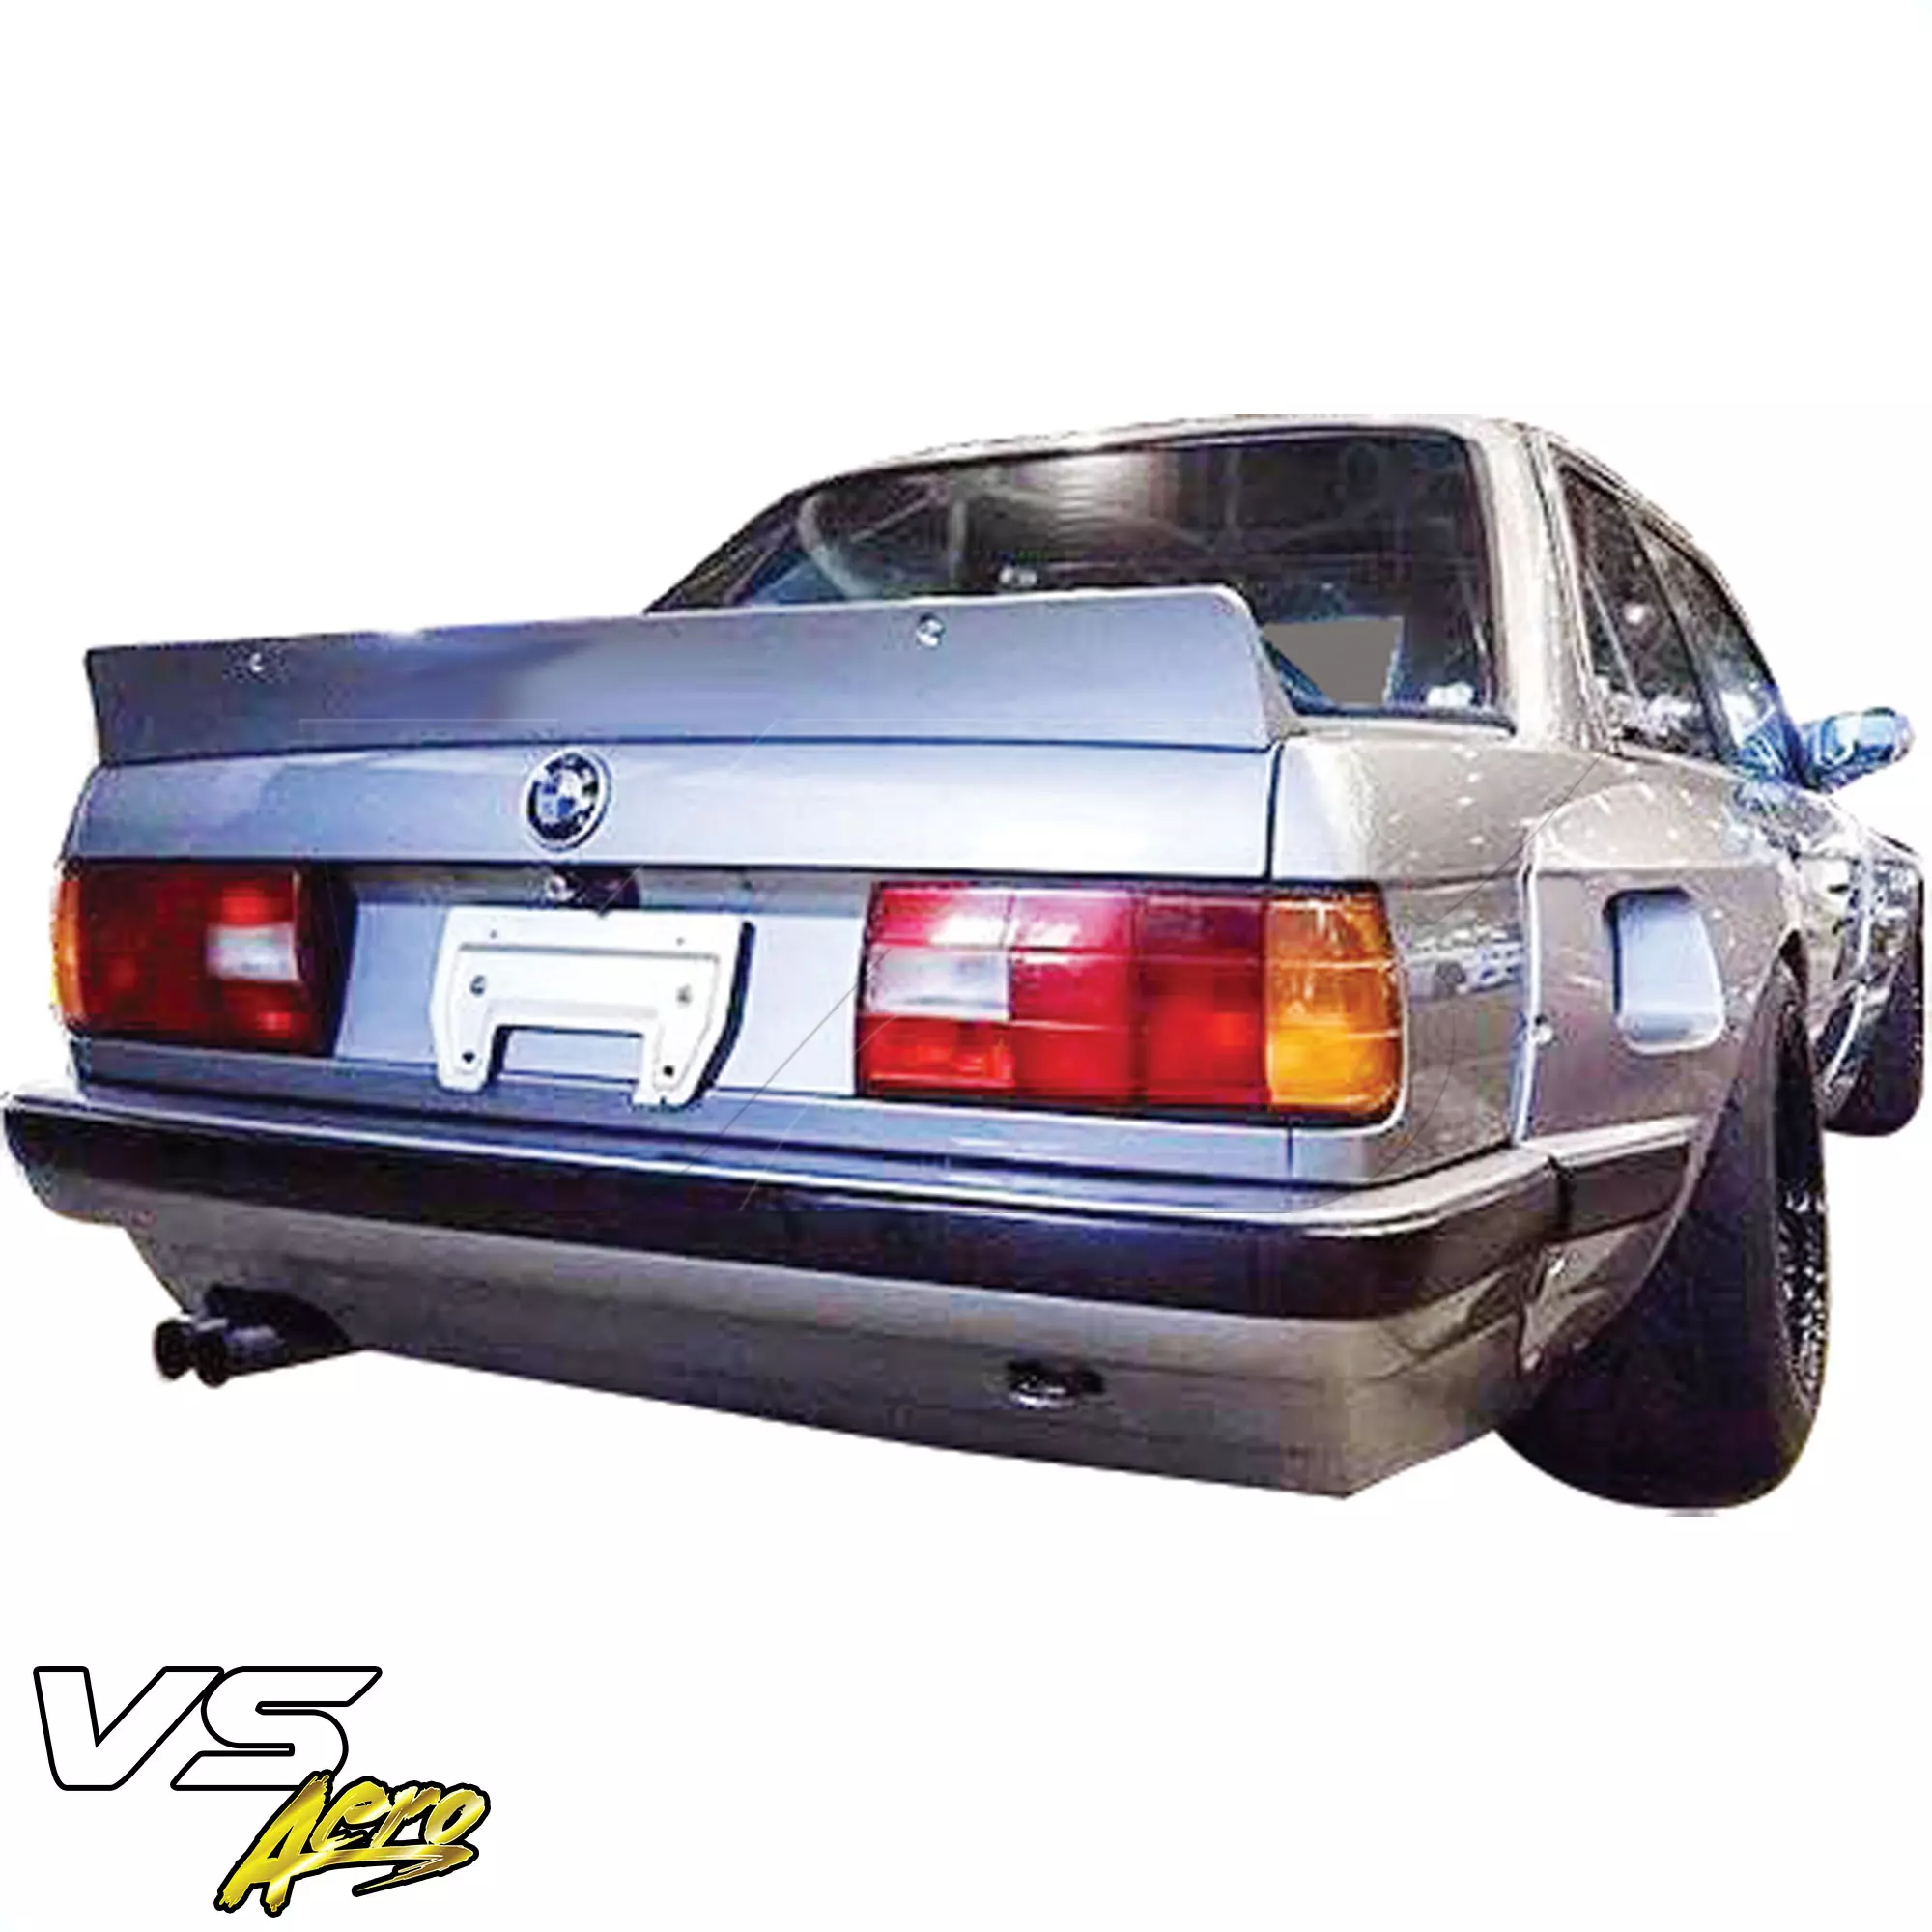 VSaero FRP TKYO Spoiler Wing > BMW 3-Series 318i 325i E30 1984-1991> 2dr Coupe - Image 7